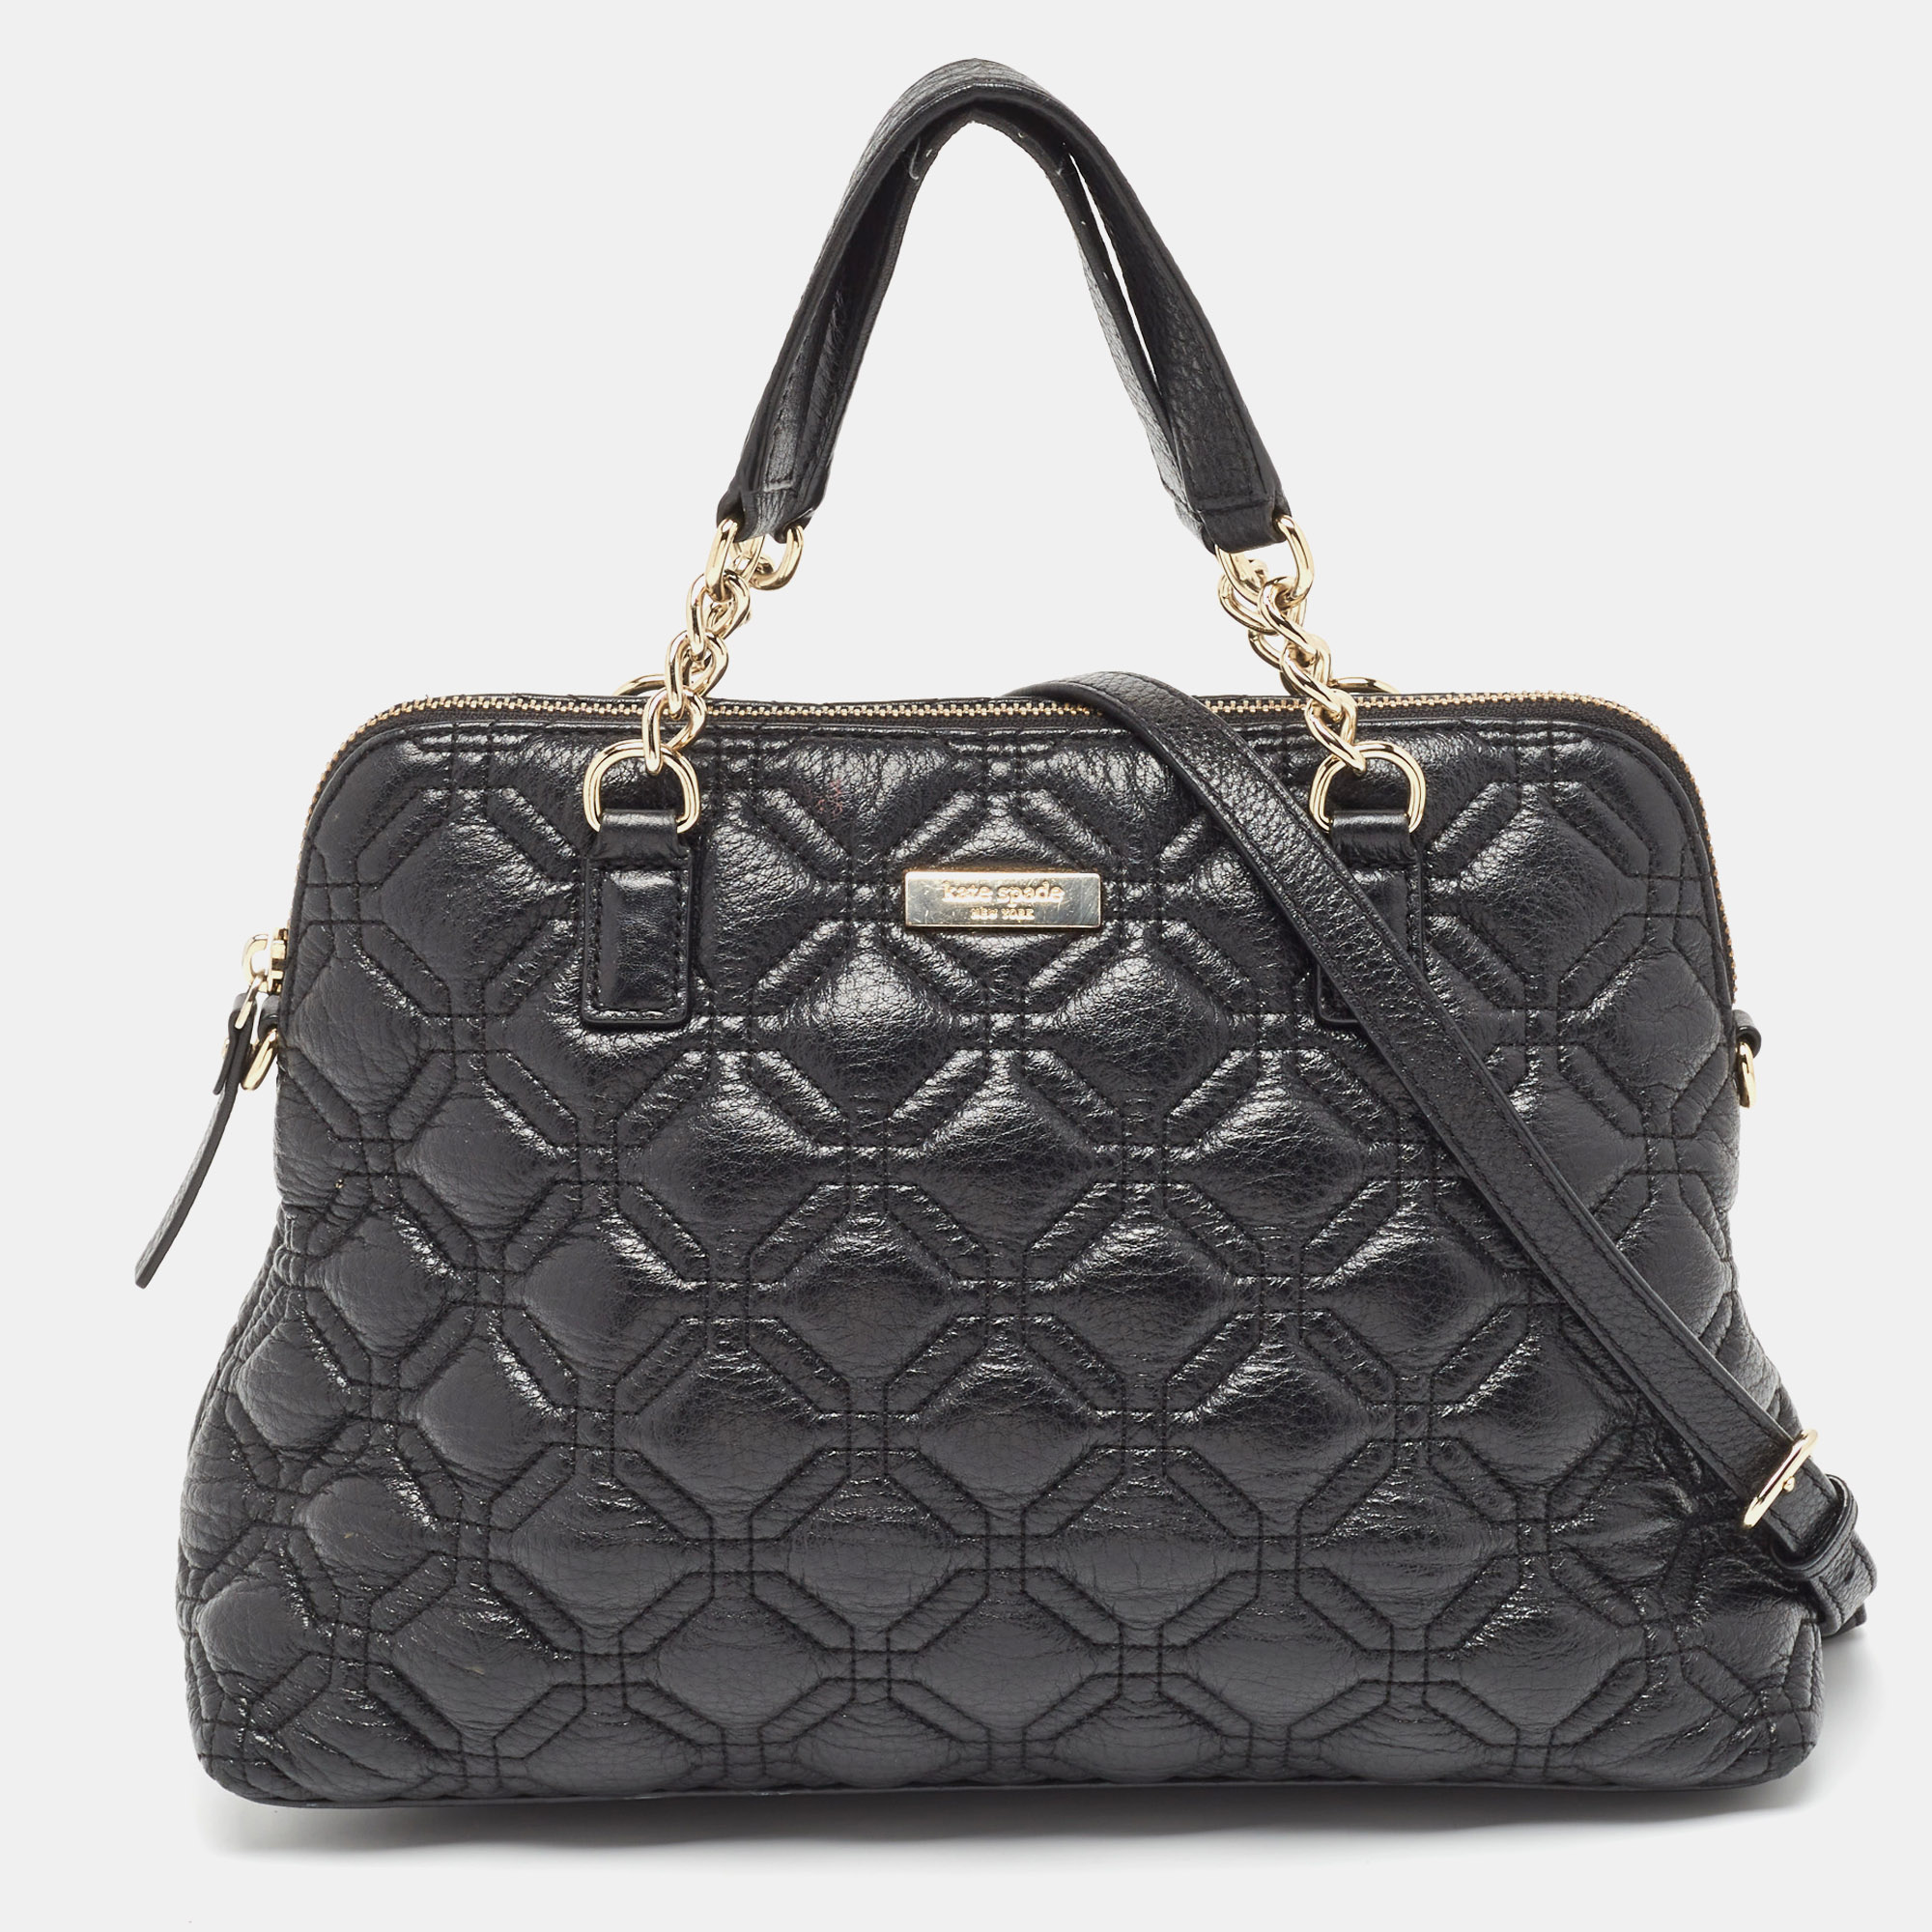 Pre-owned Kate Spade Black Quilted Shimmer Leather Astor Court Grace Bag